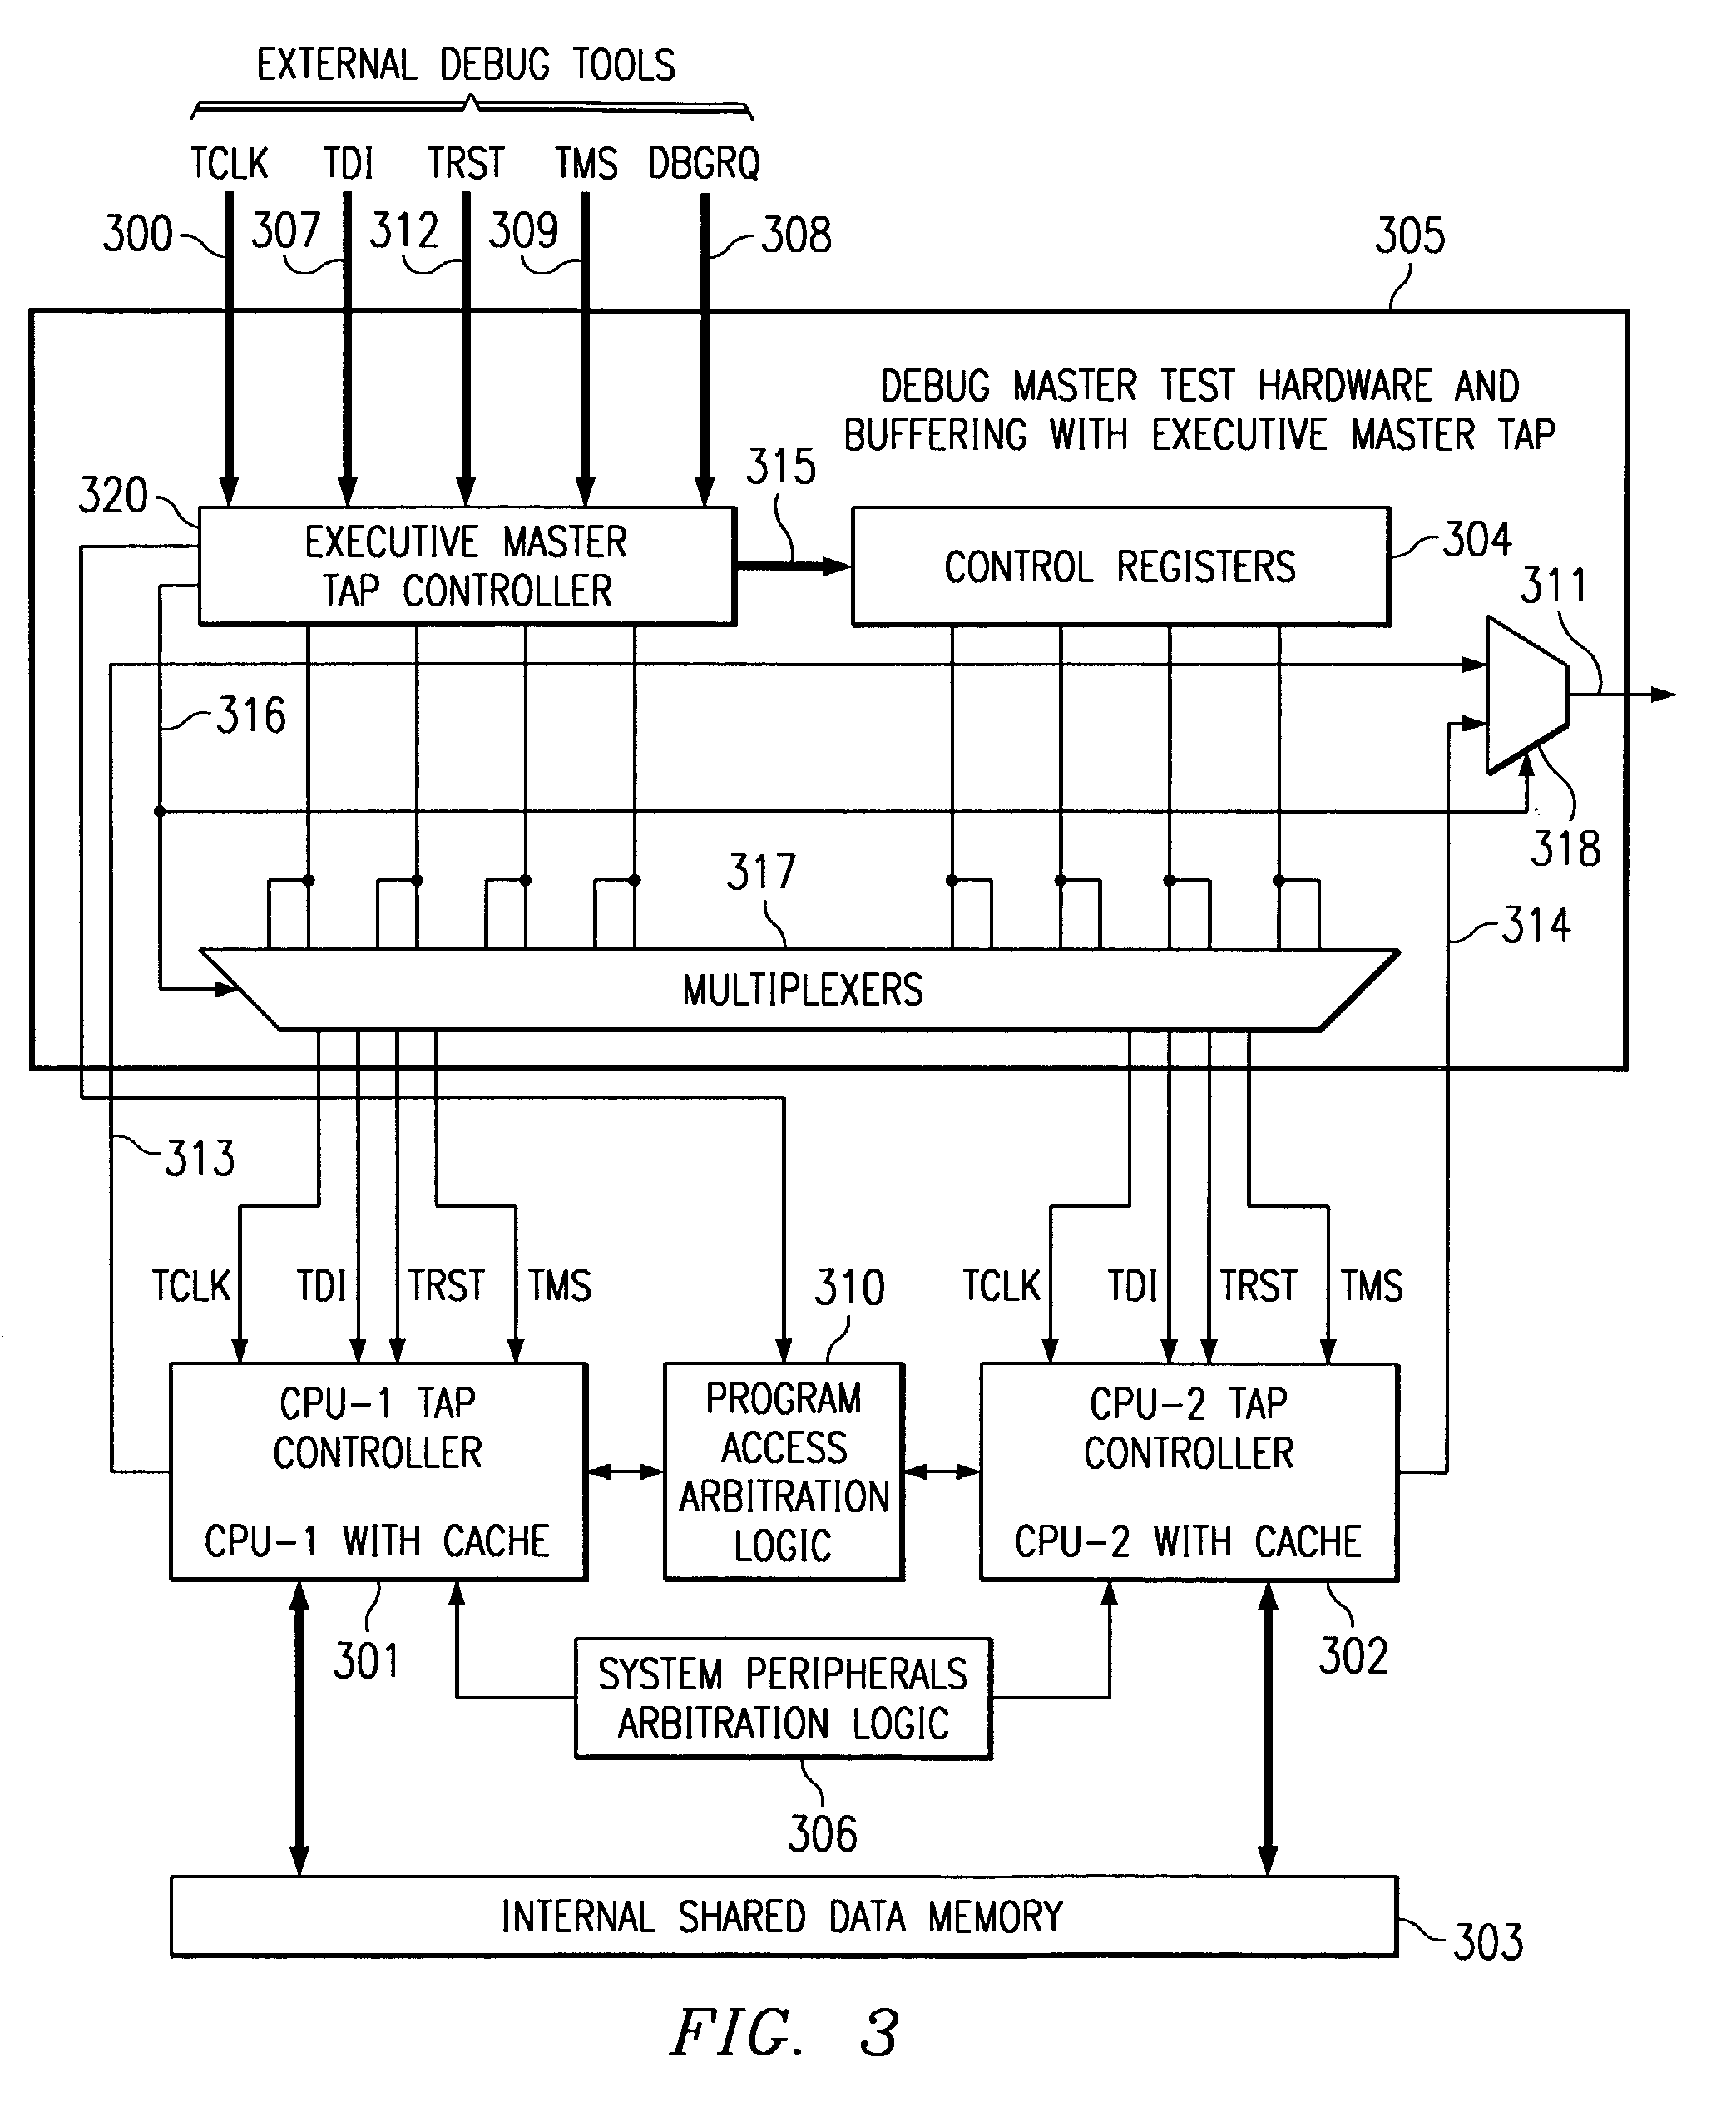 Embedded symmetric multiprocessor system debug